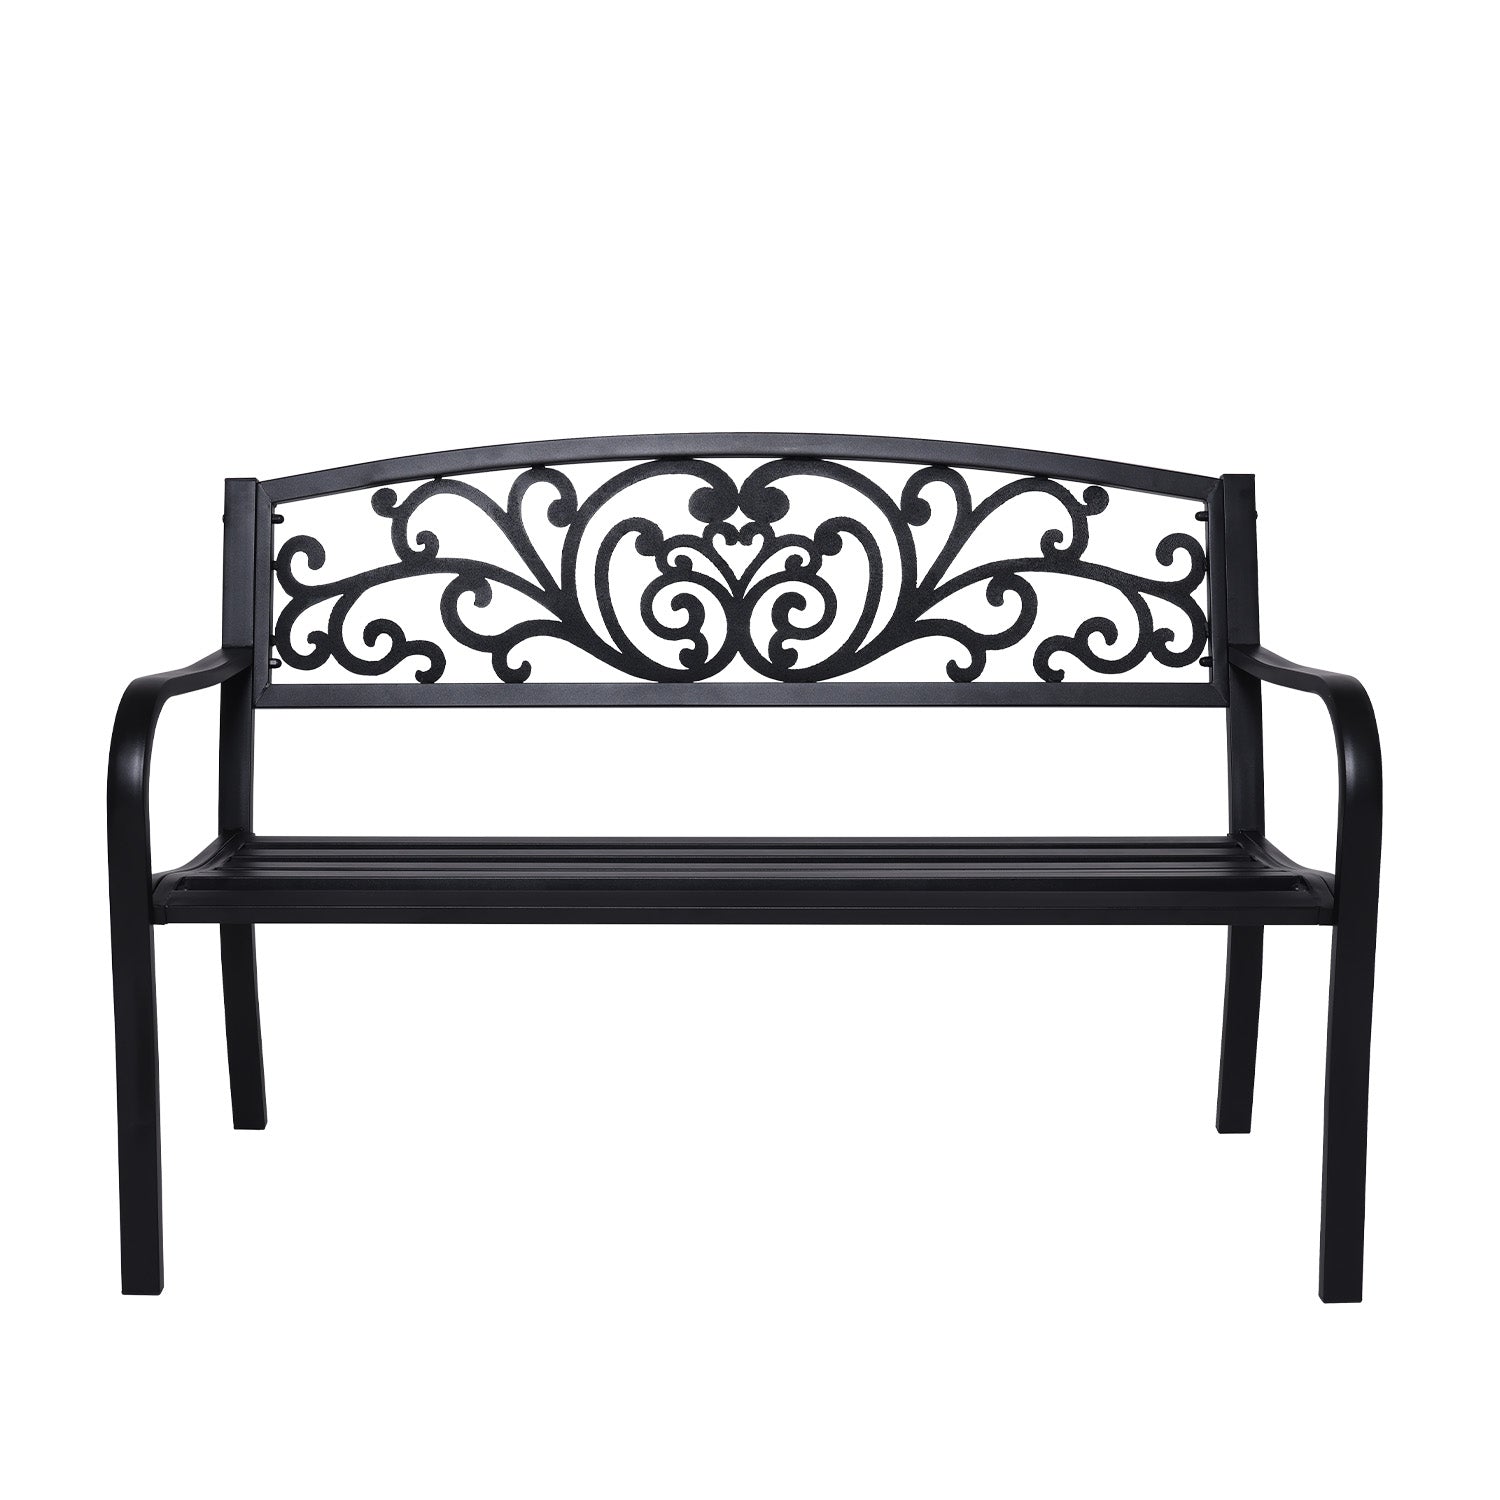 Outdoor Bench Seat Wallaroo Steel Metal Garden Black - Floral